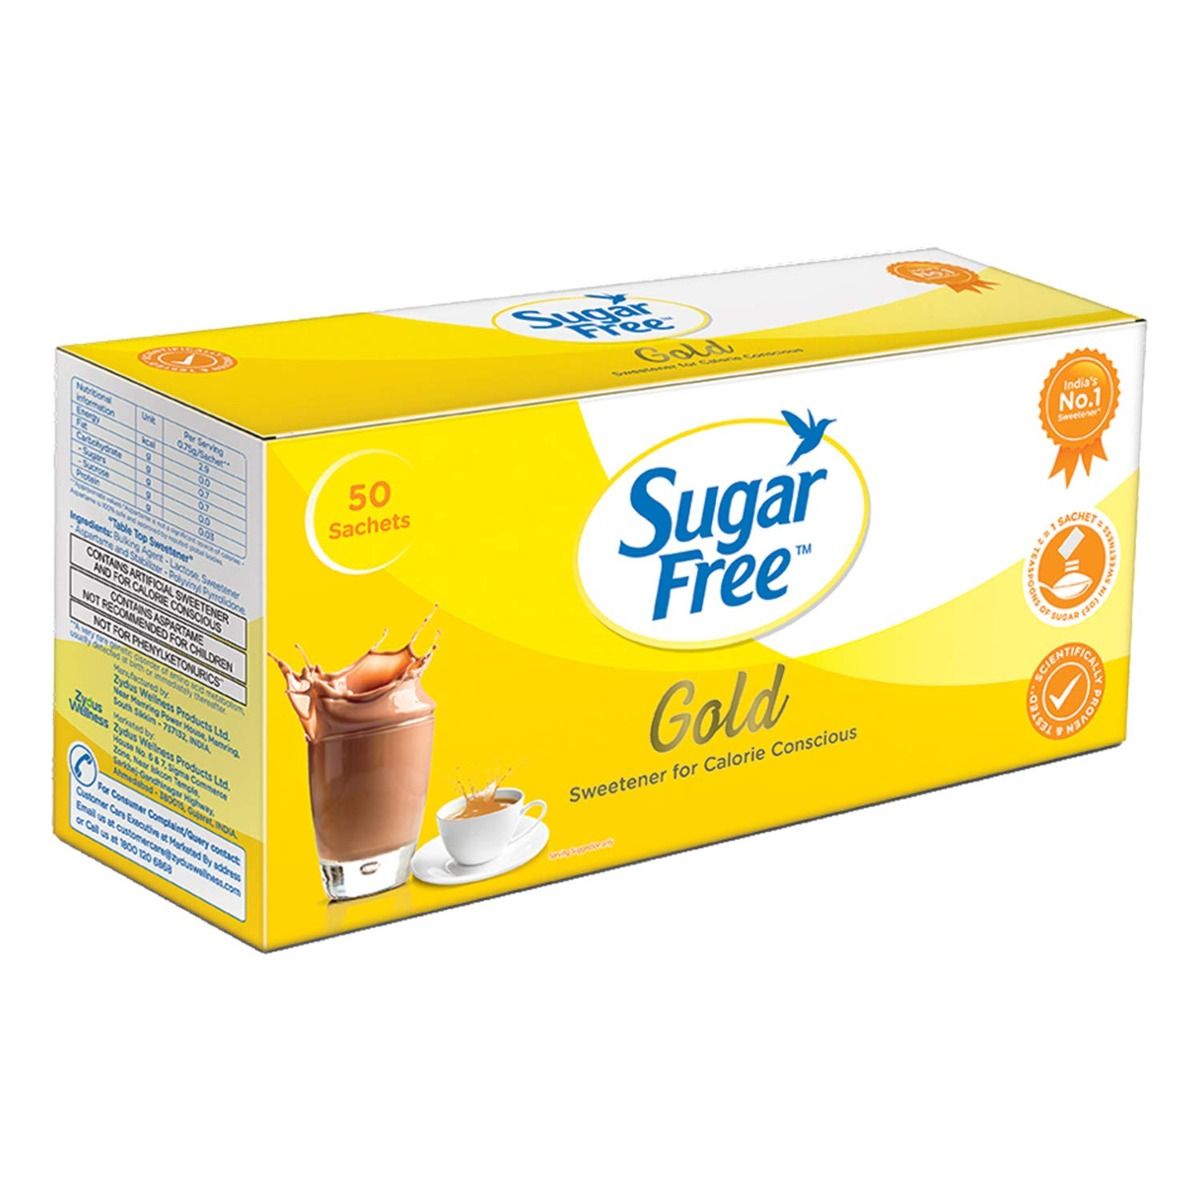 Buy Sugar Free Gold Low Calorie Sweetener, 50 Count Online